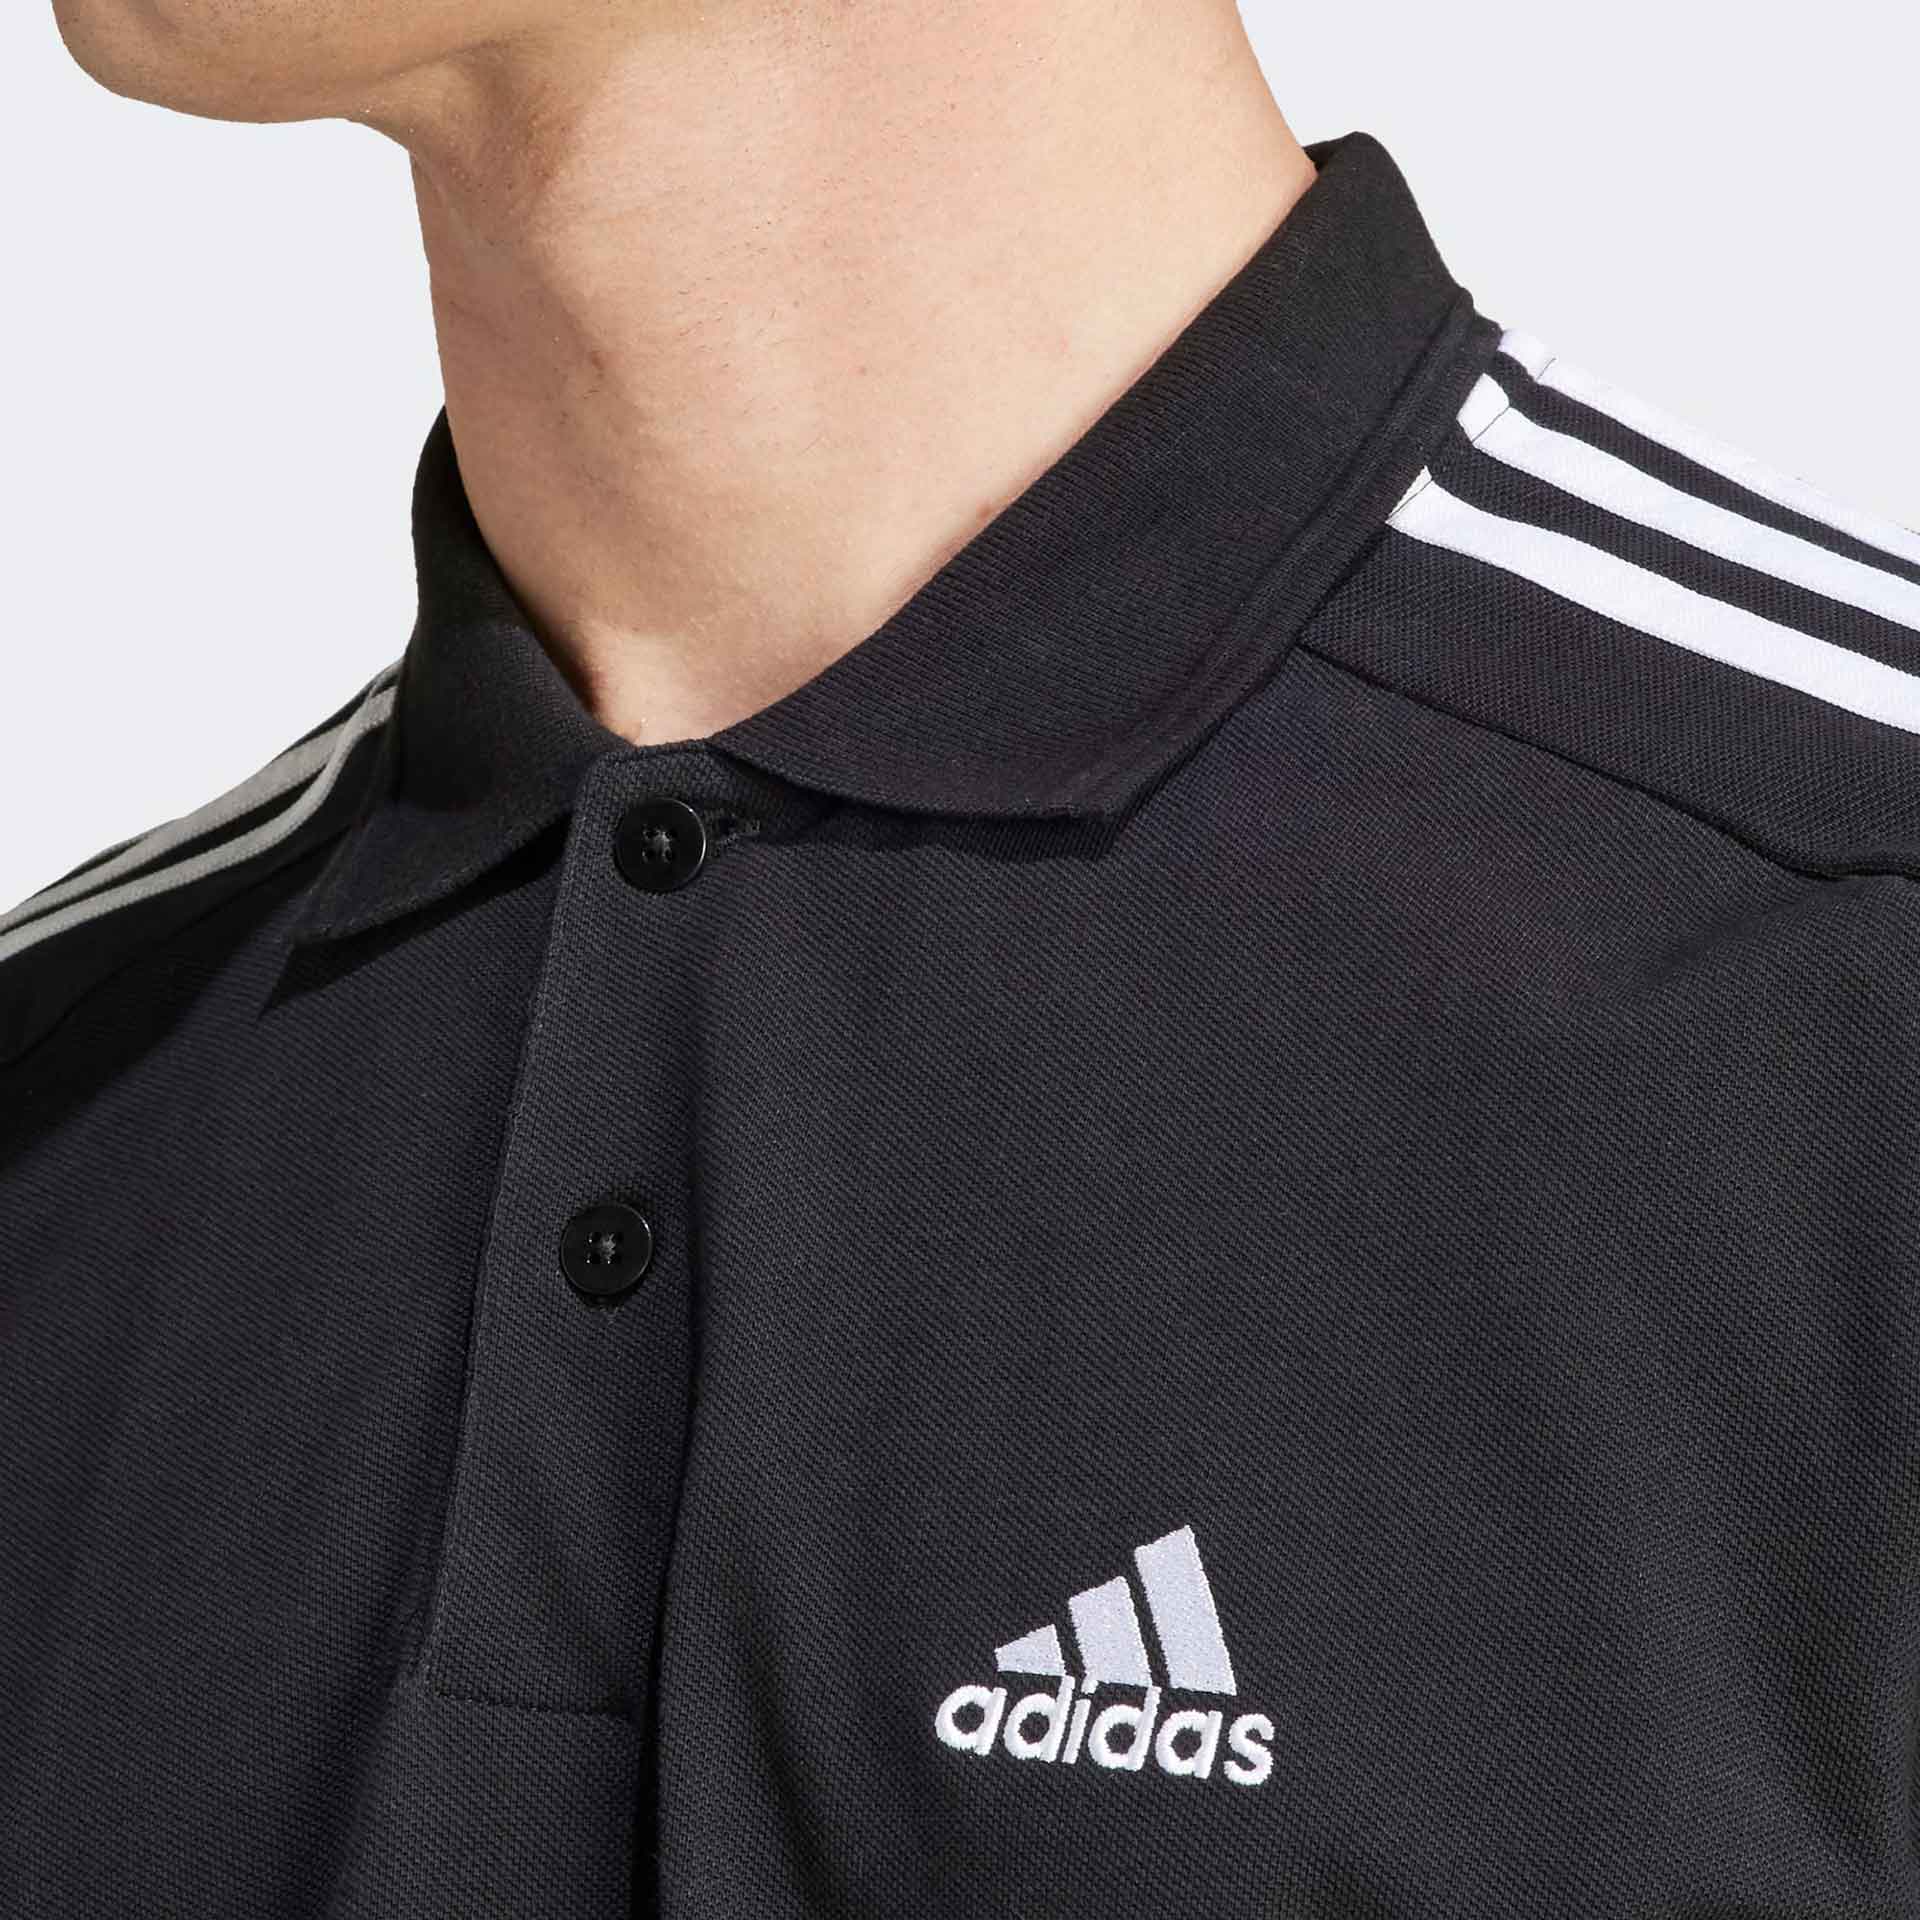 adidas Essentials Piqué Embroidered Small Logo 3-Stripes Polo Black/White